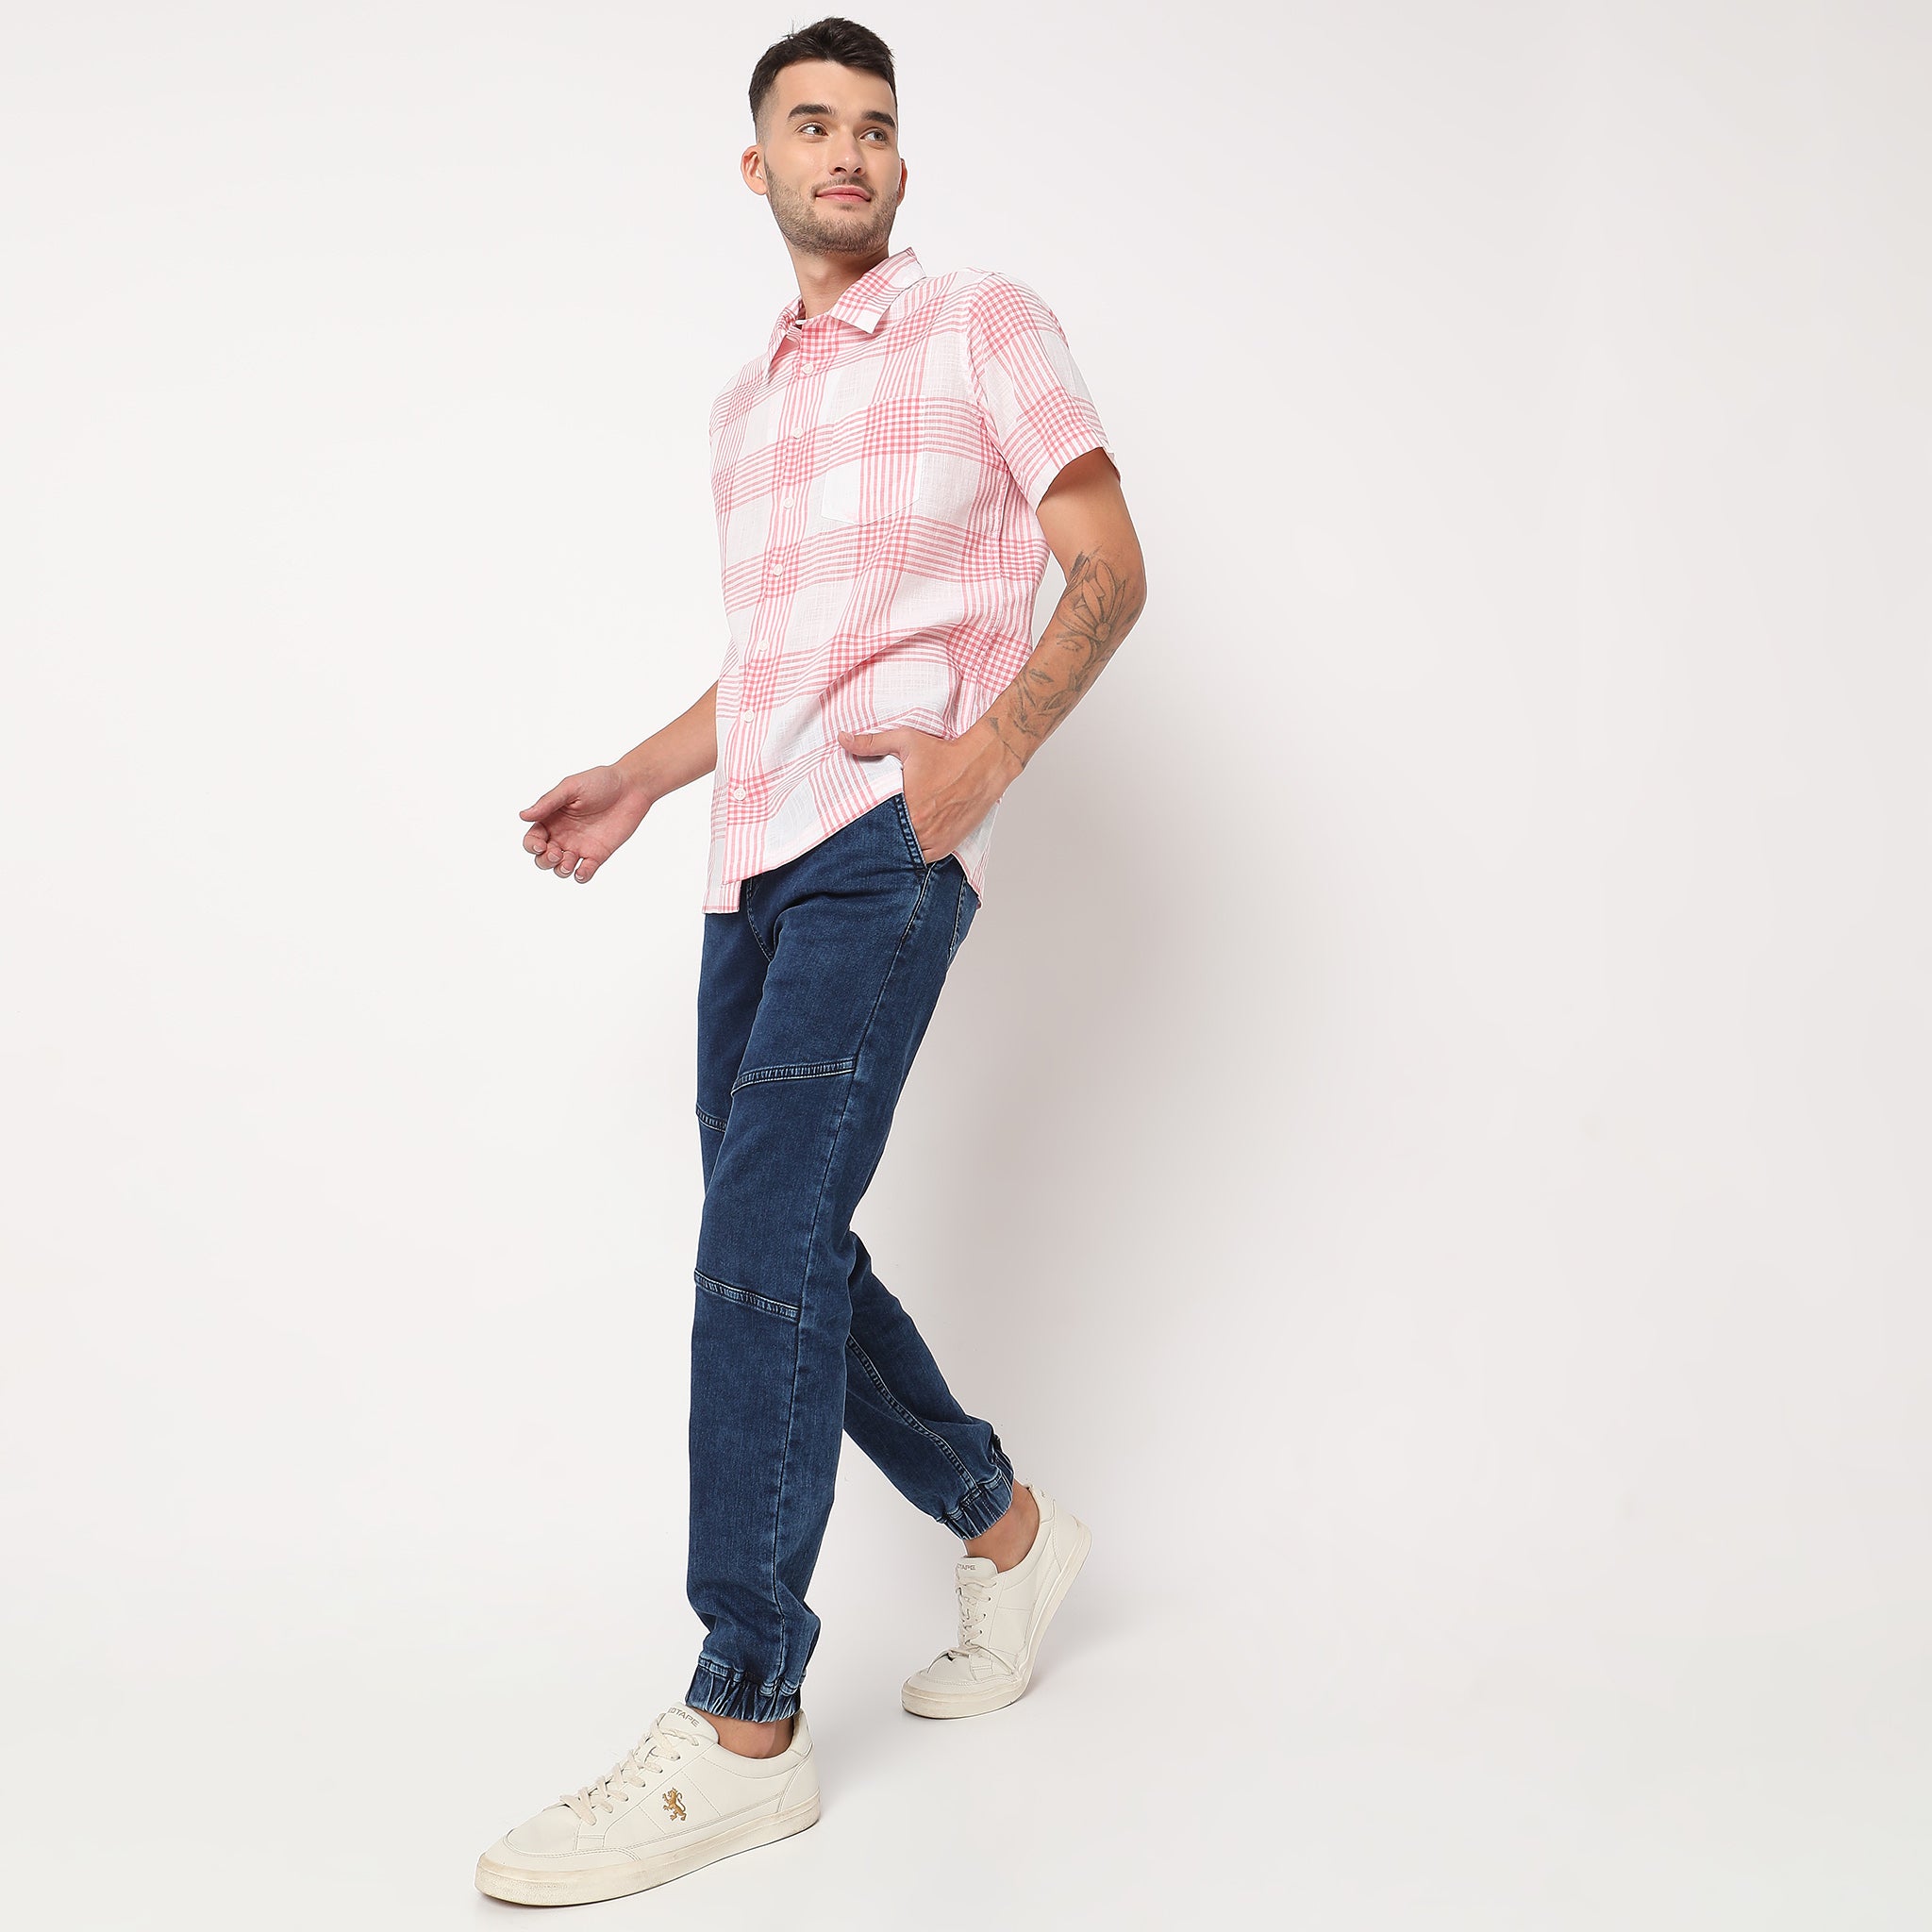 Men's Jeans & Pants | Buy Mens Denim Online | Rip Curl New Zealand - Rip  Curl New Zealand